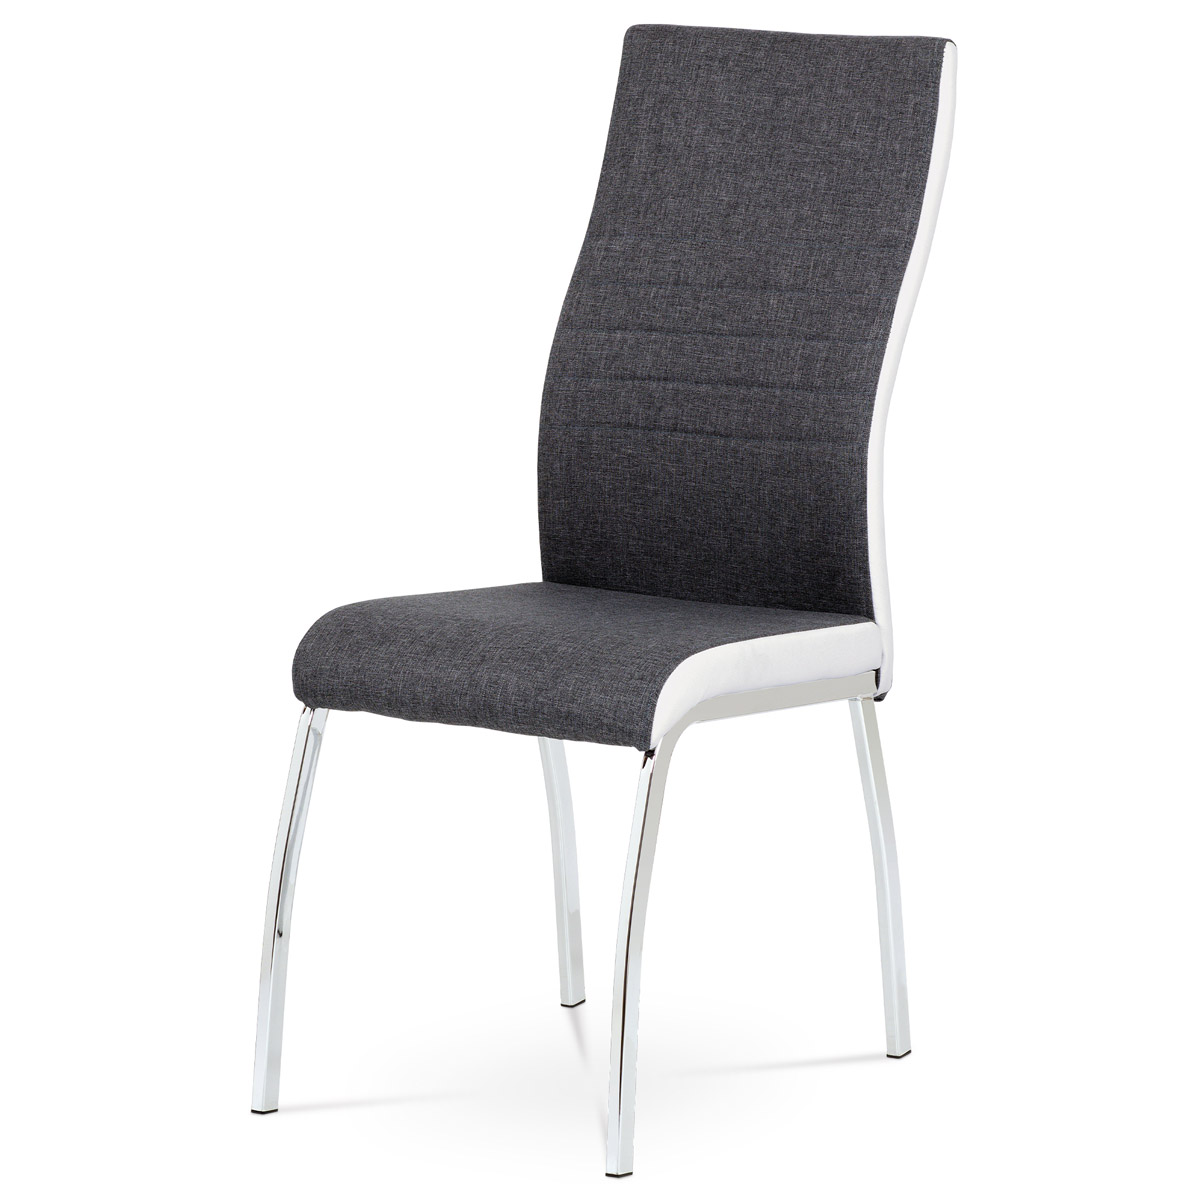 Jídelní židle šedá látka + bílá koženka / chrom